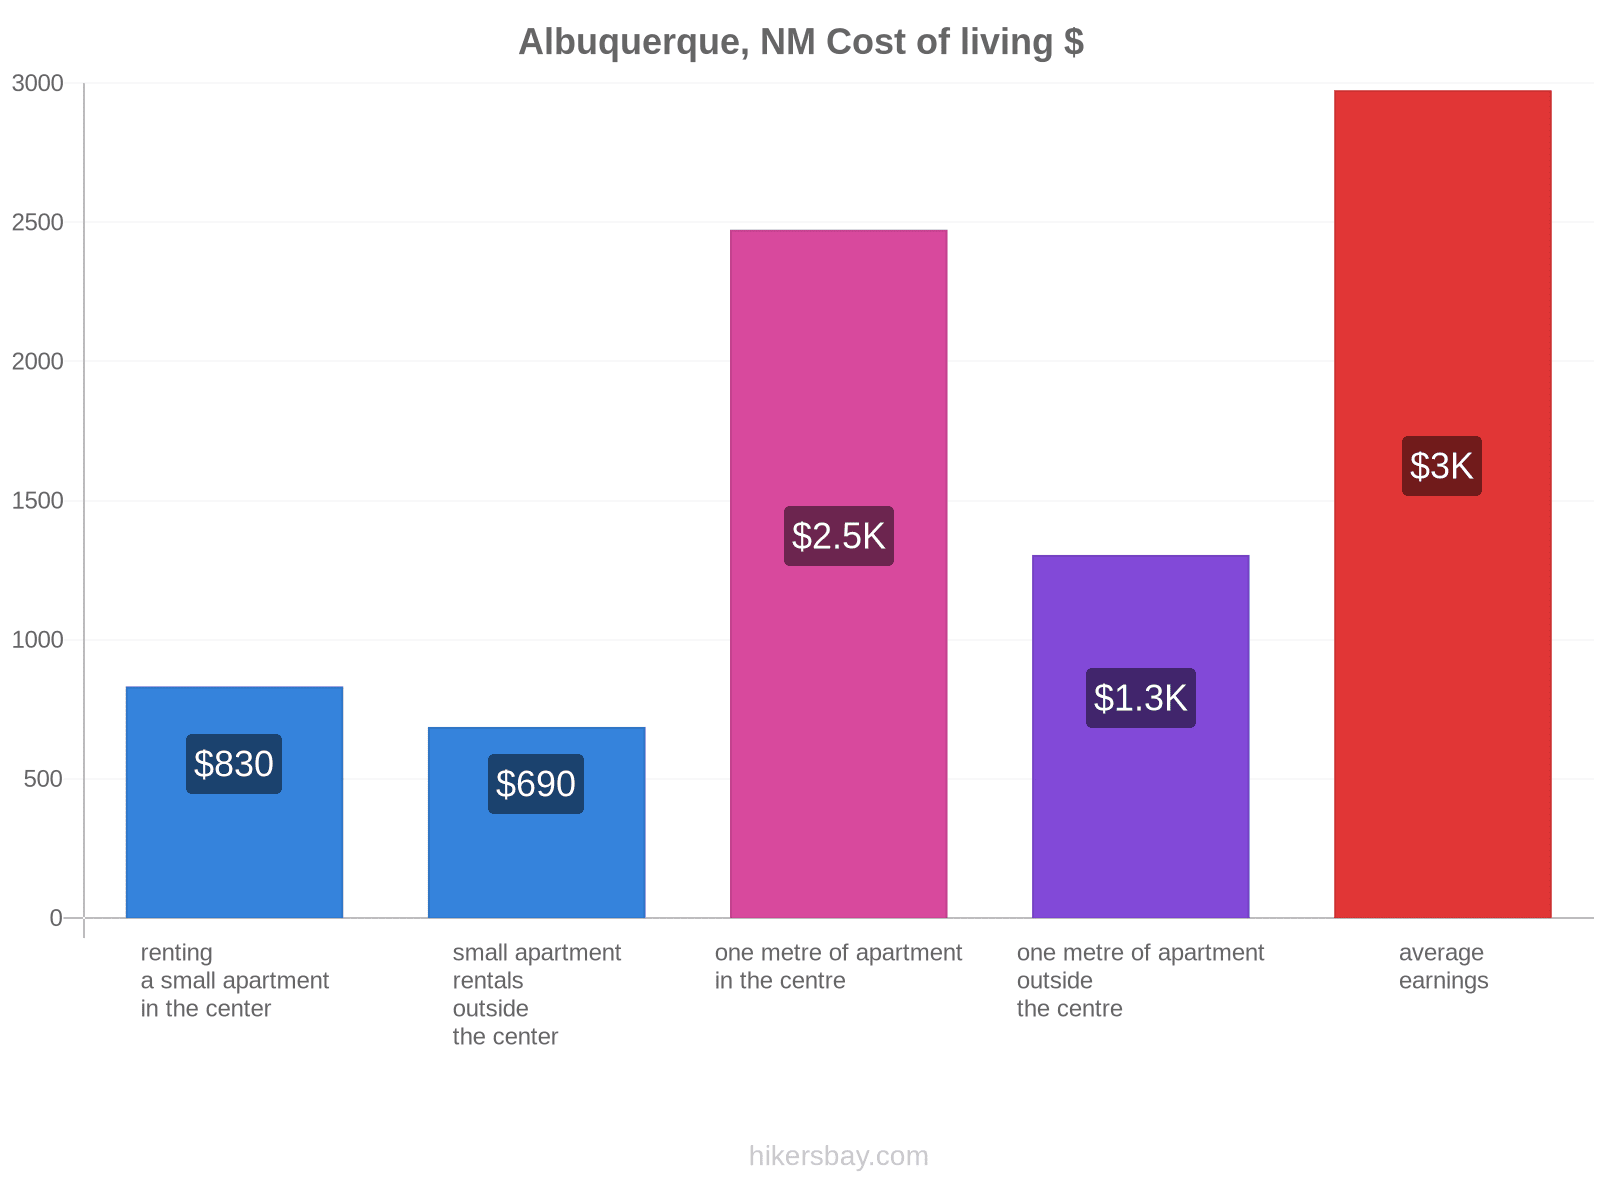 Albuquerque, NM cost of living hikersbay.com